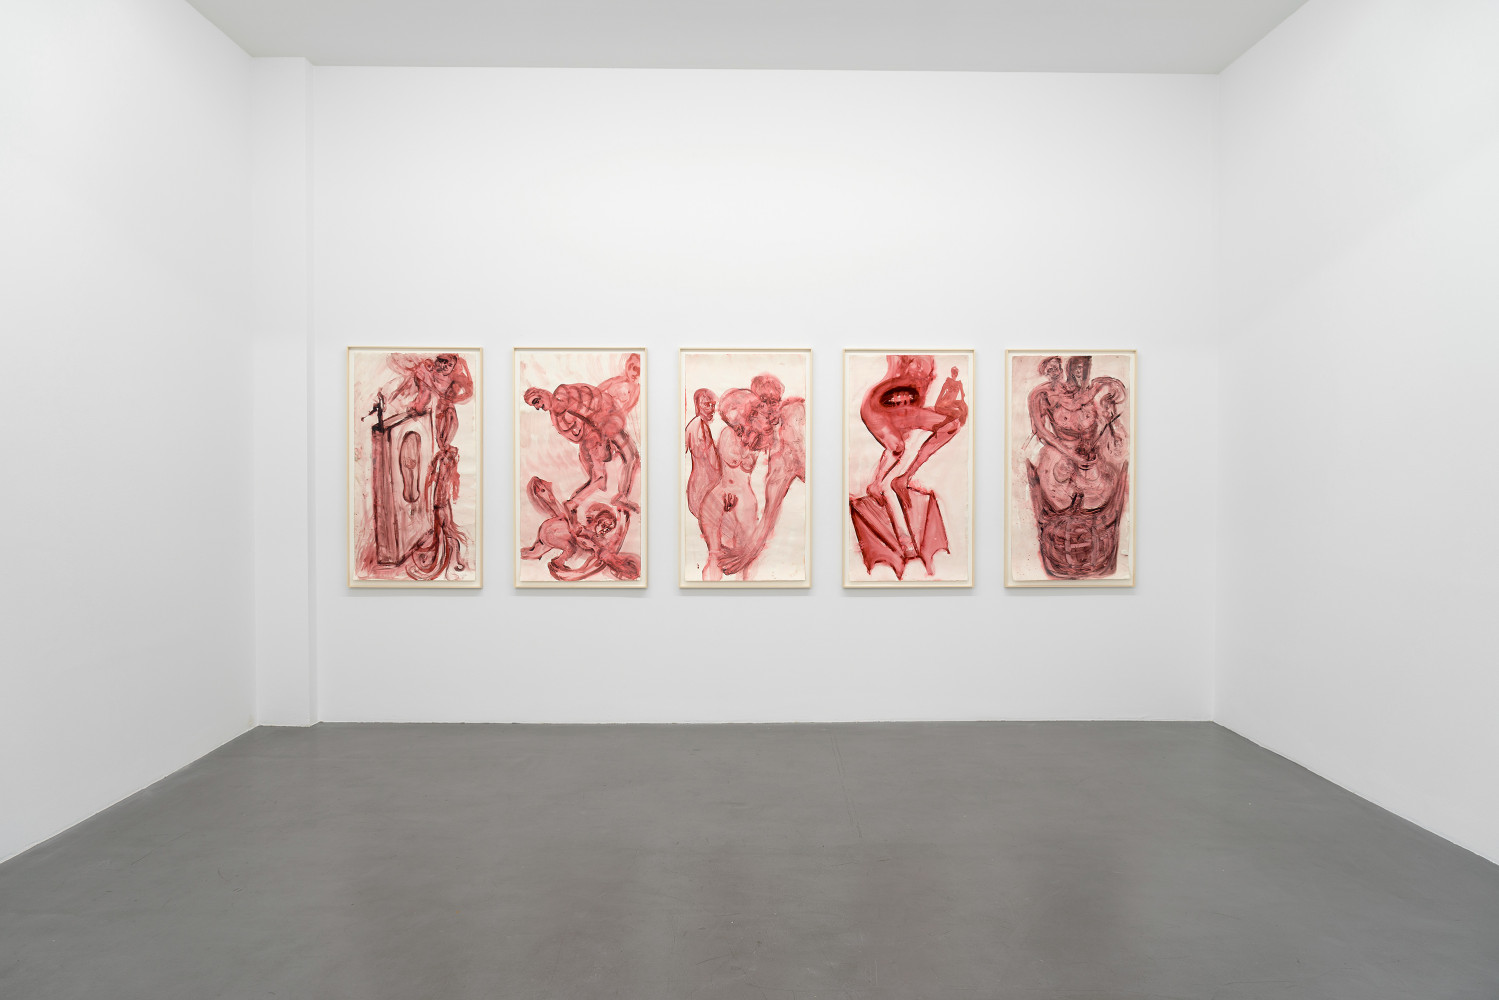 The Estate of Martin Disler, ‘Martin Disler – Malerei’, Installation view, Buchmann Galerie, 2017